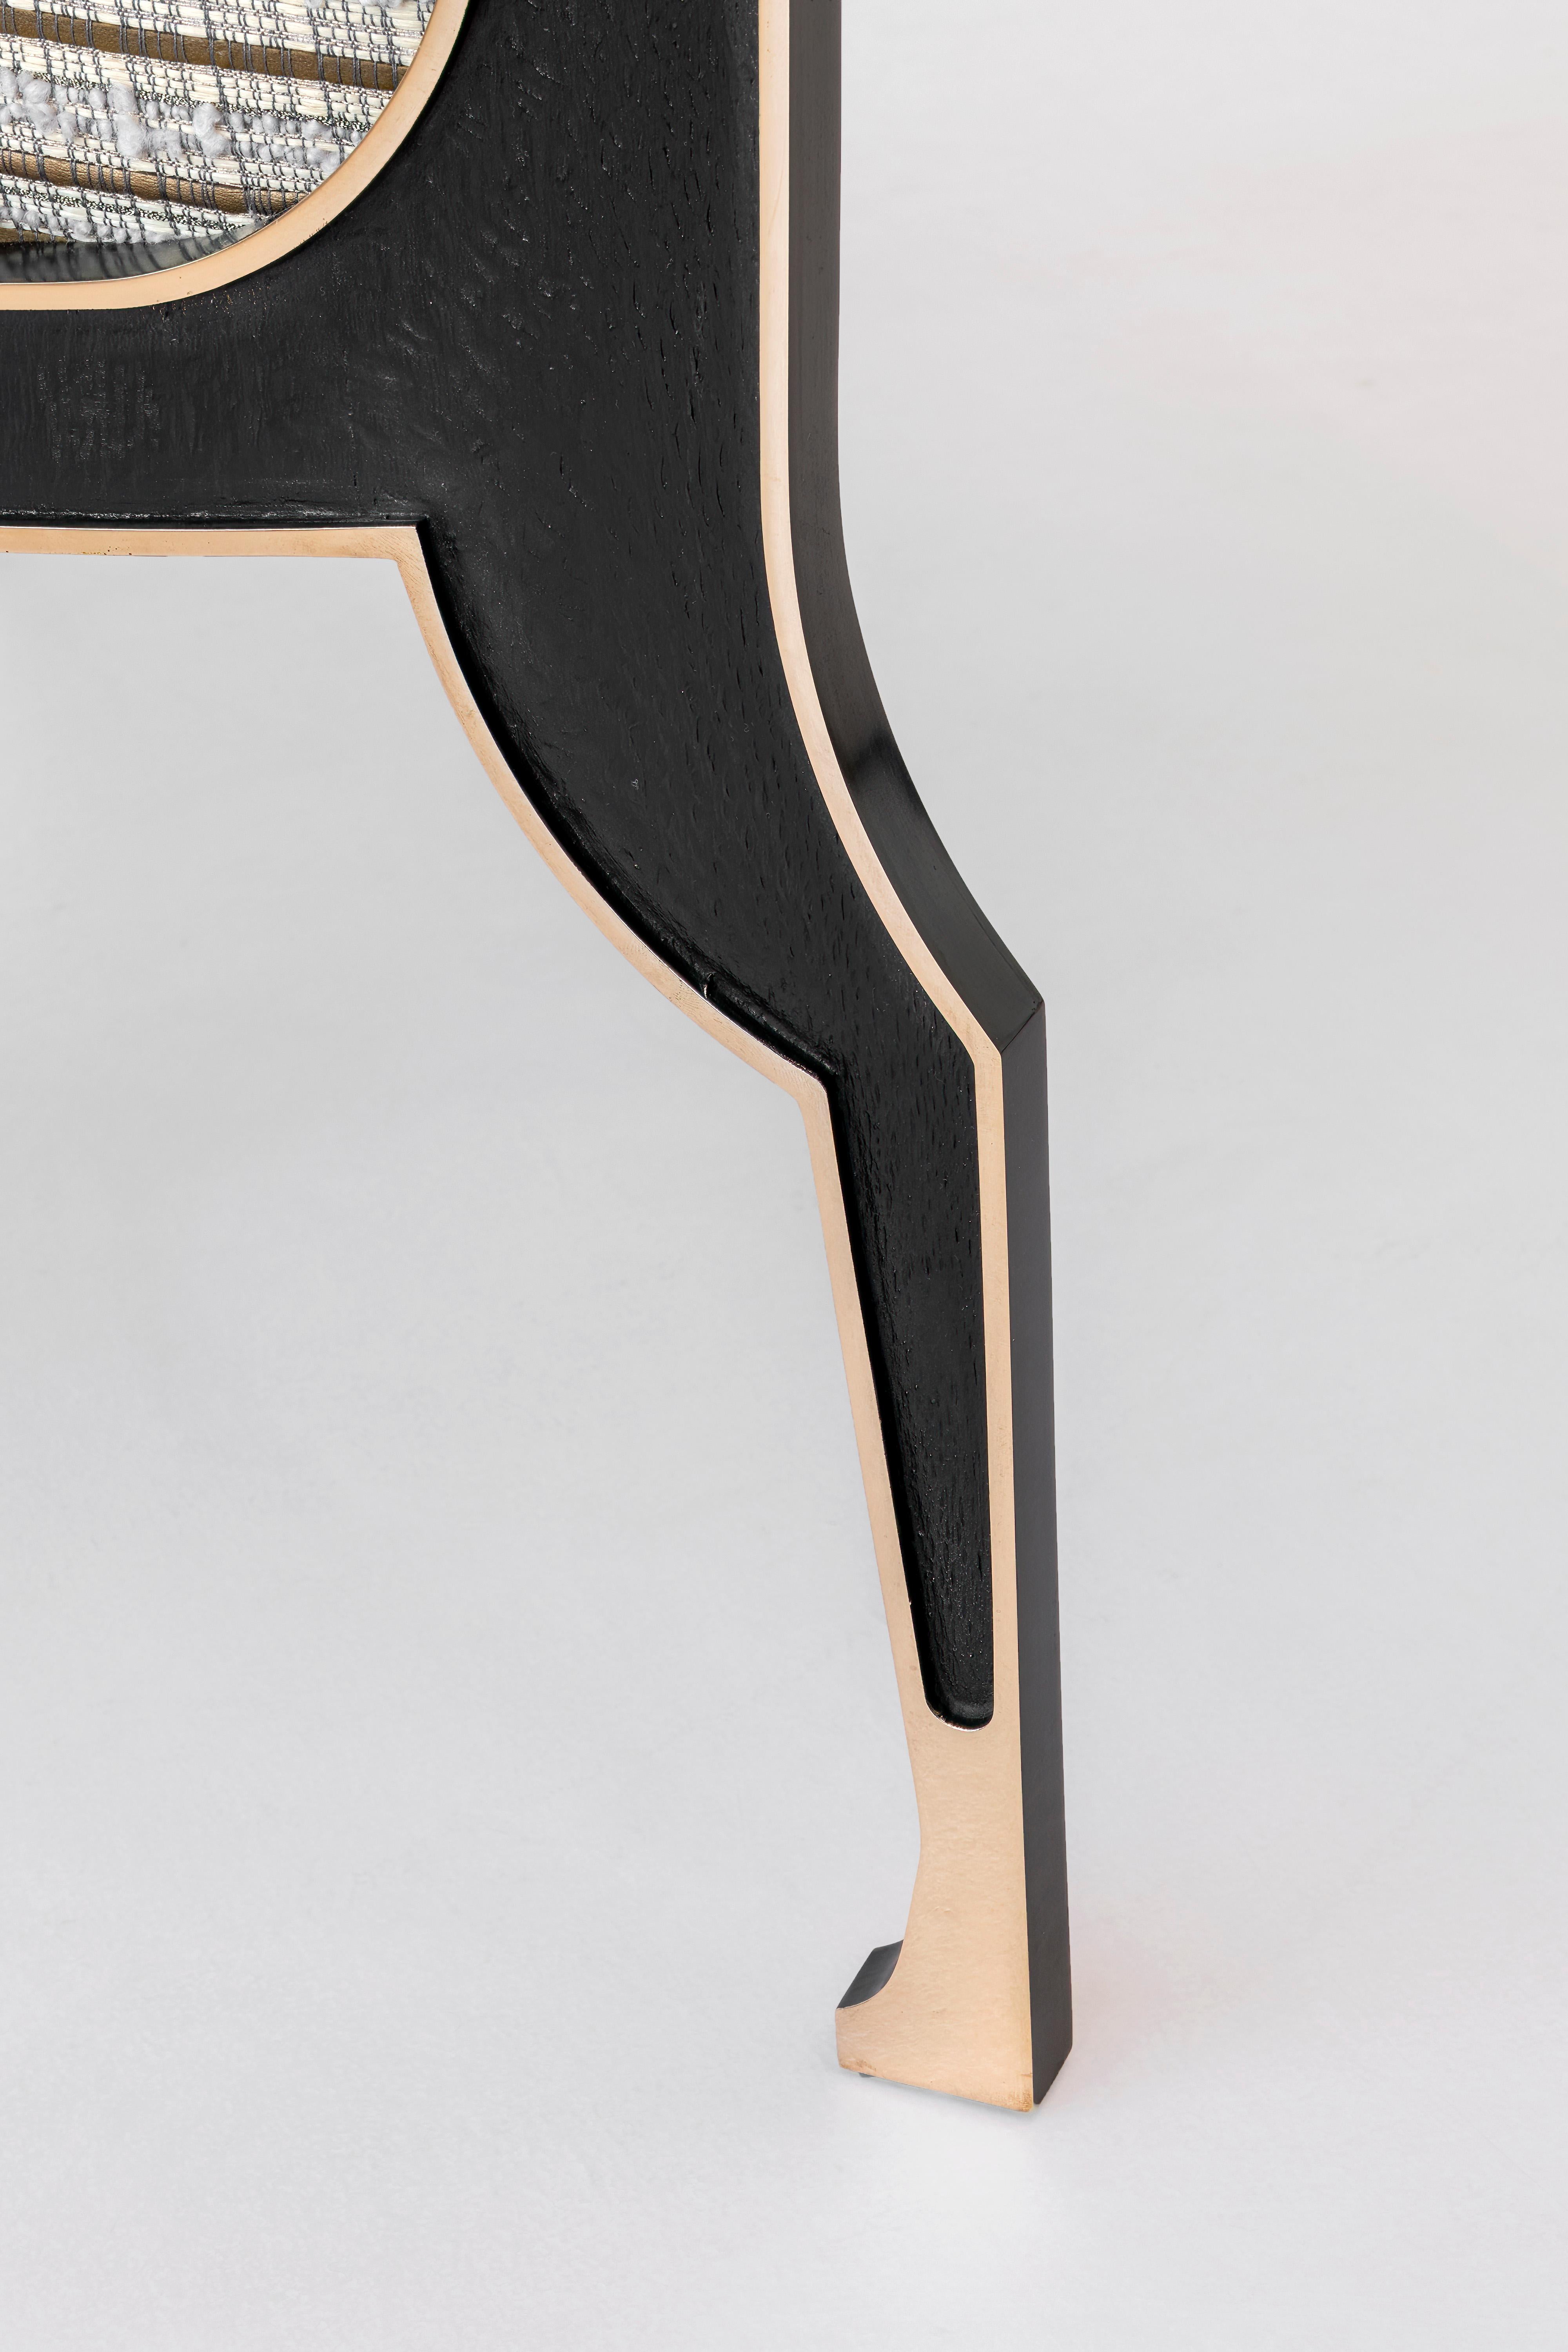 Cast Achille Salvagni, Tutankhamun, Contemporary Lounge Chair, Italy, 2022